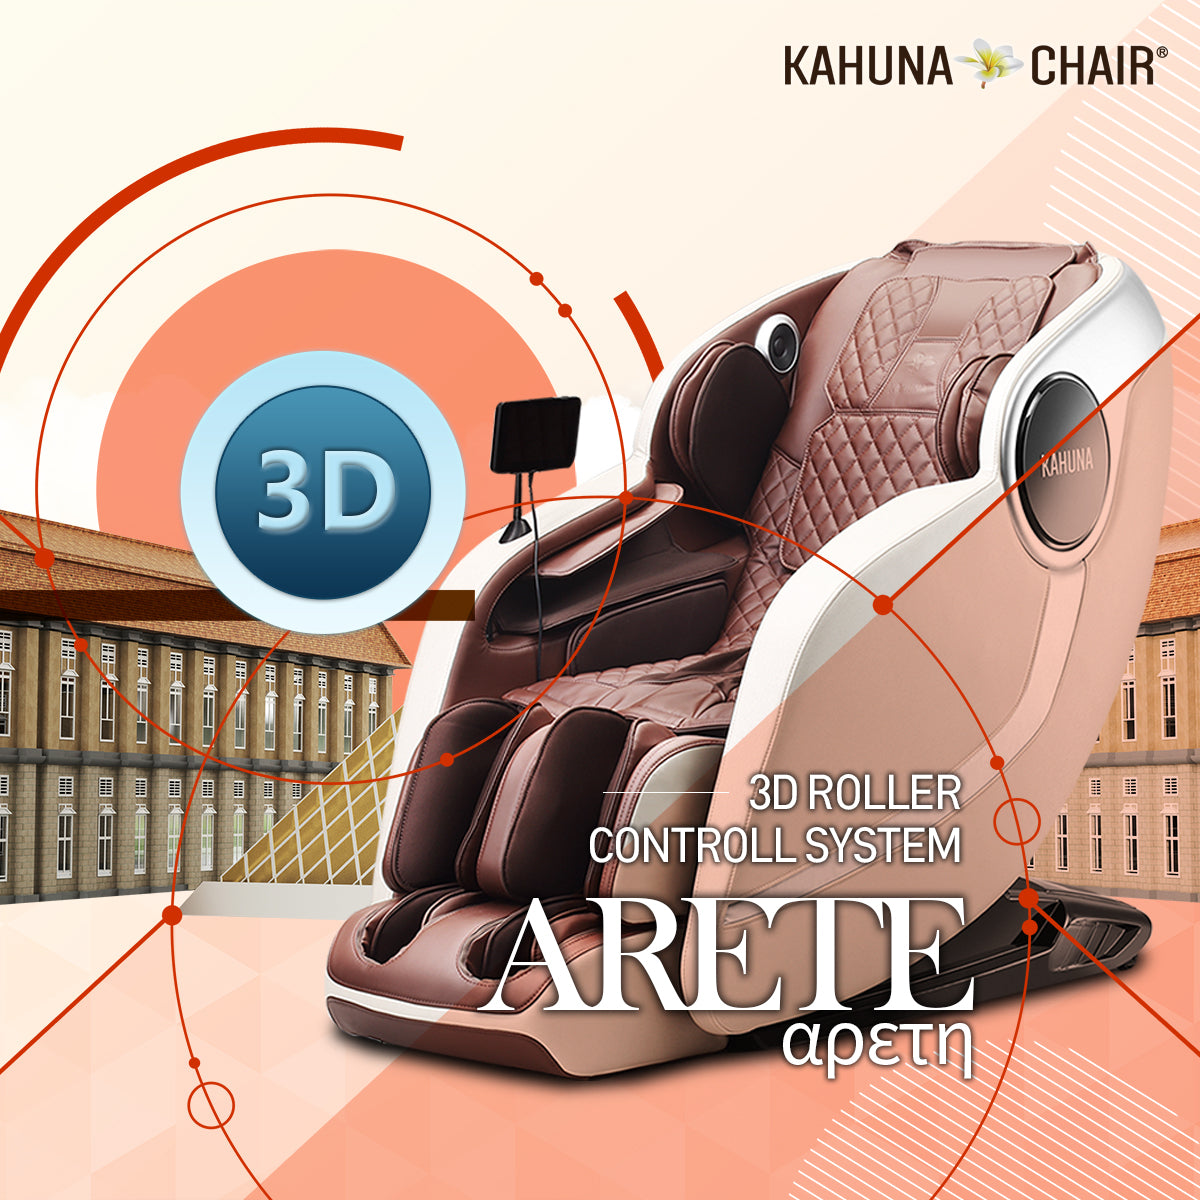 kahuna Em Arete Massage chair 3d roller control system